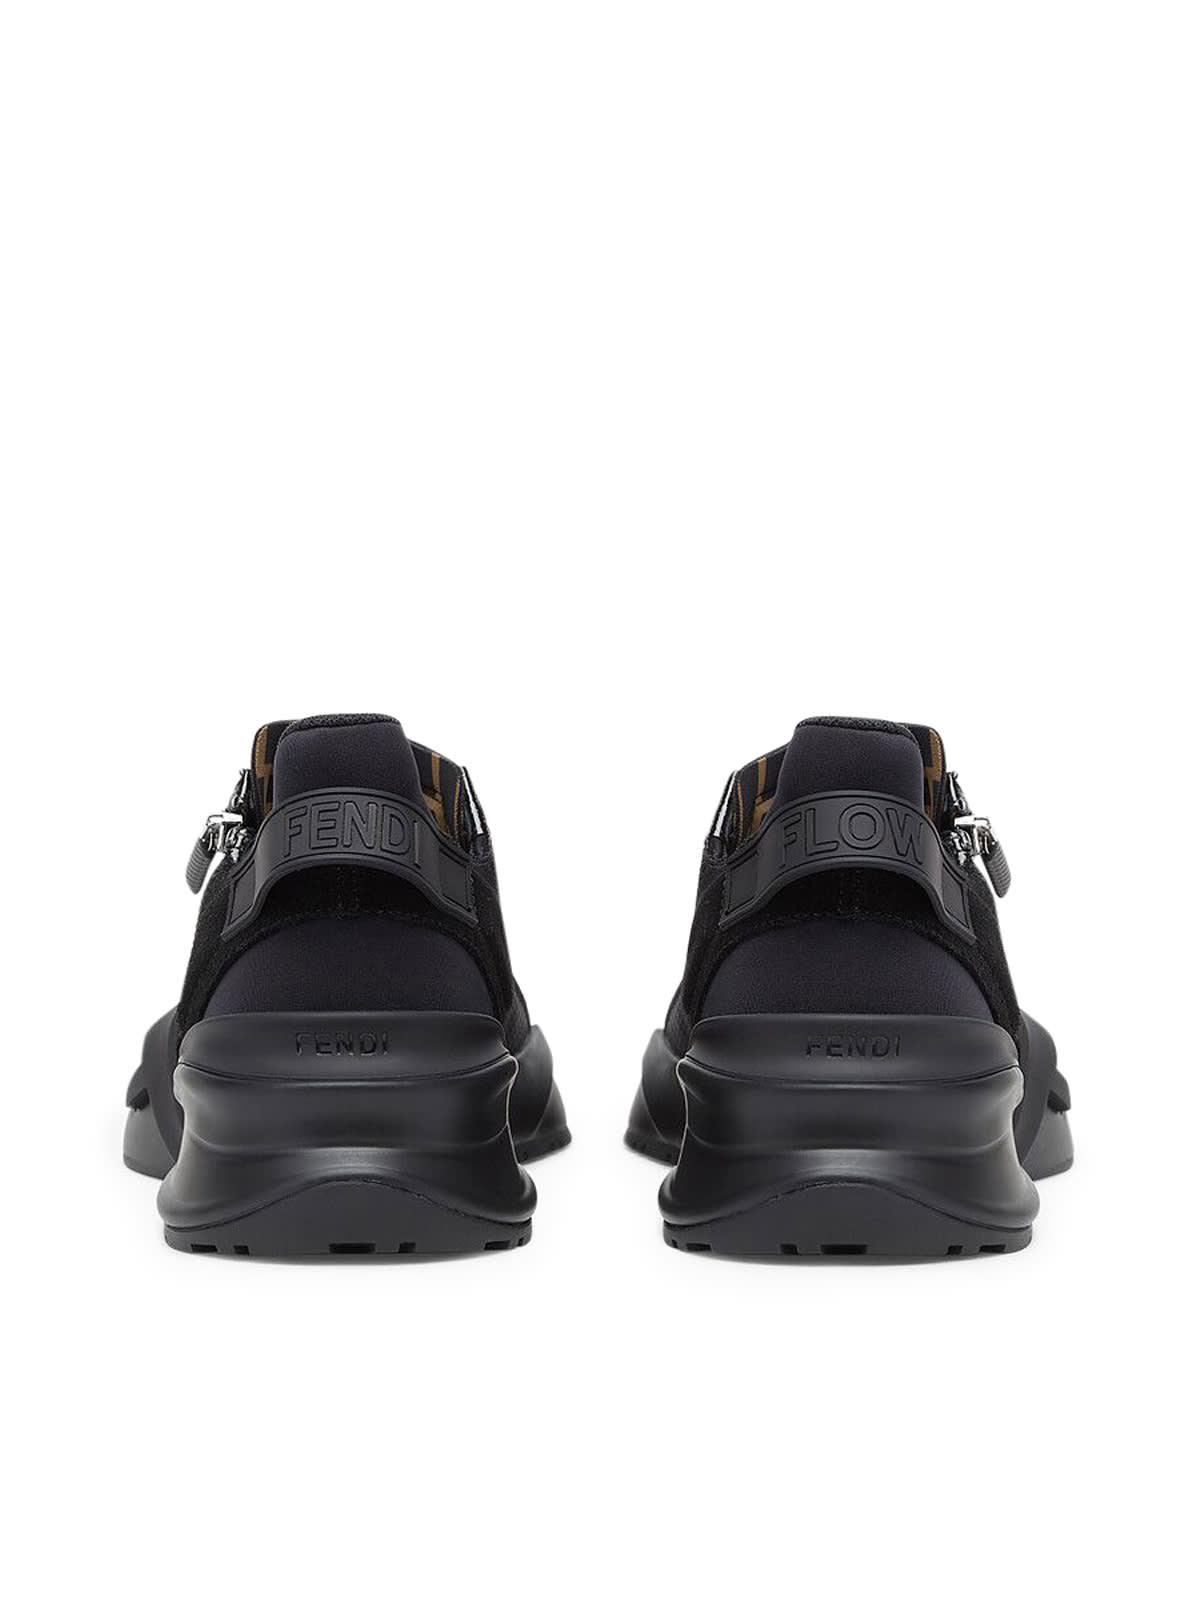 Fendi Zip Sneakers in Black for Men | Lyst